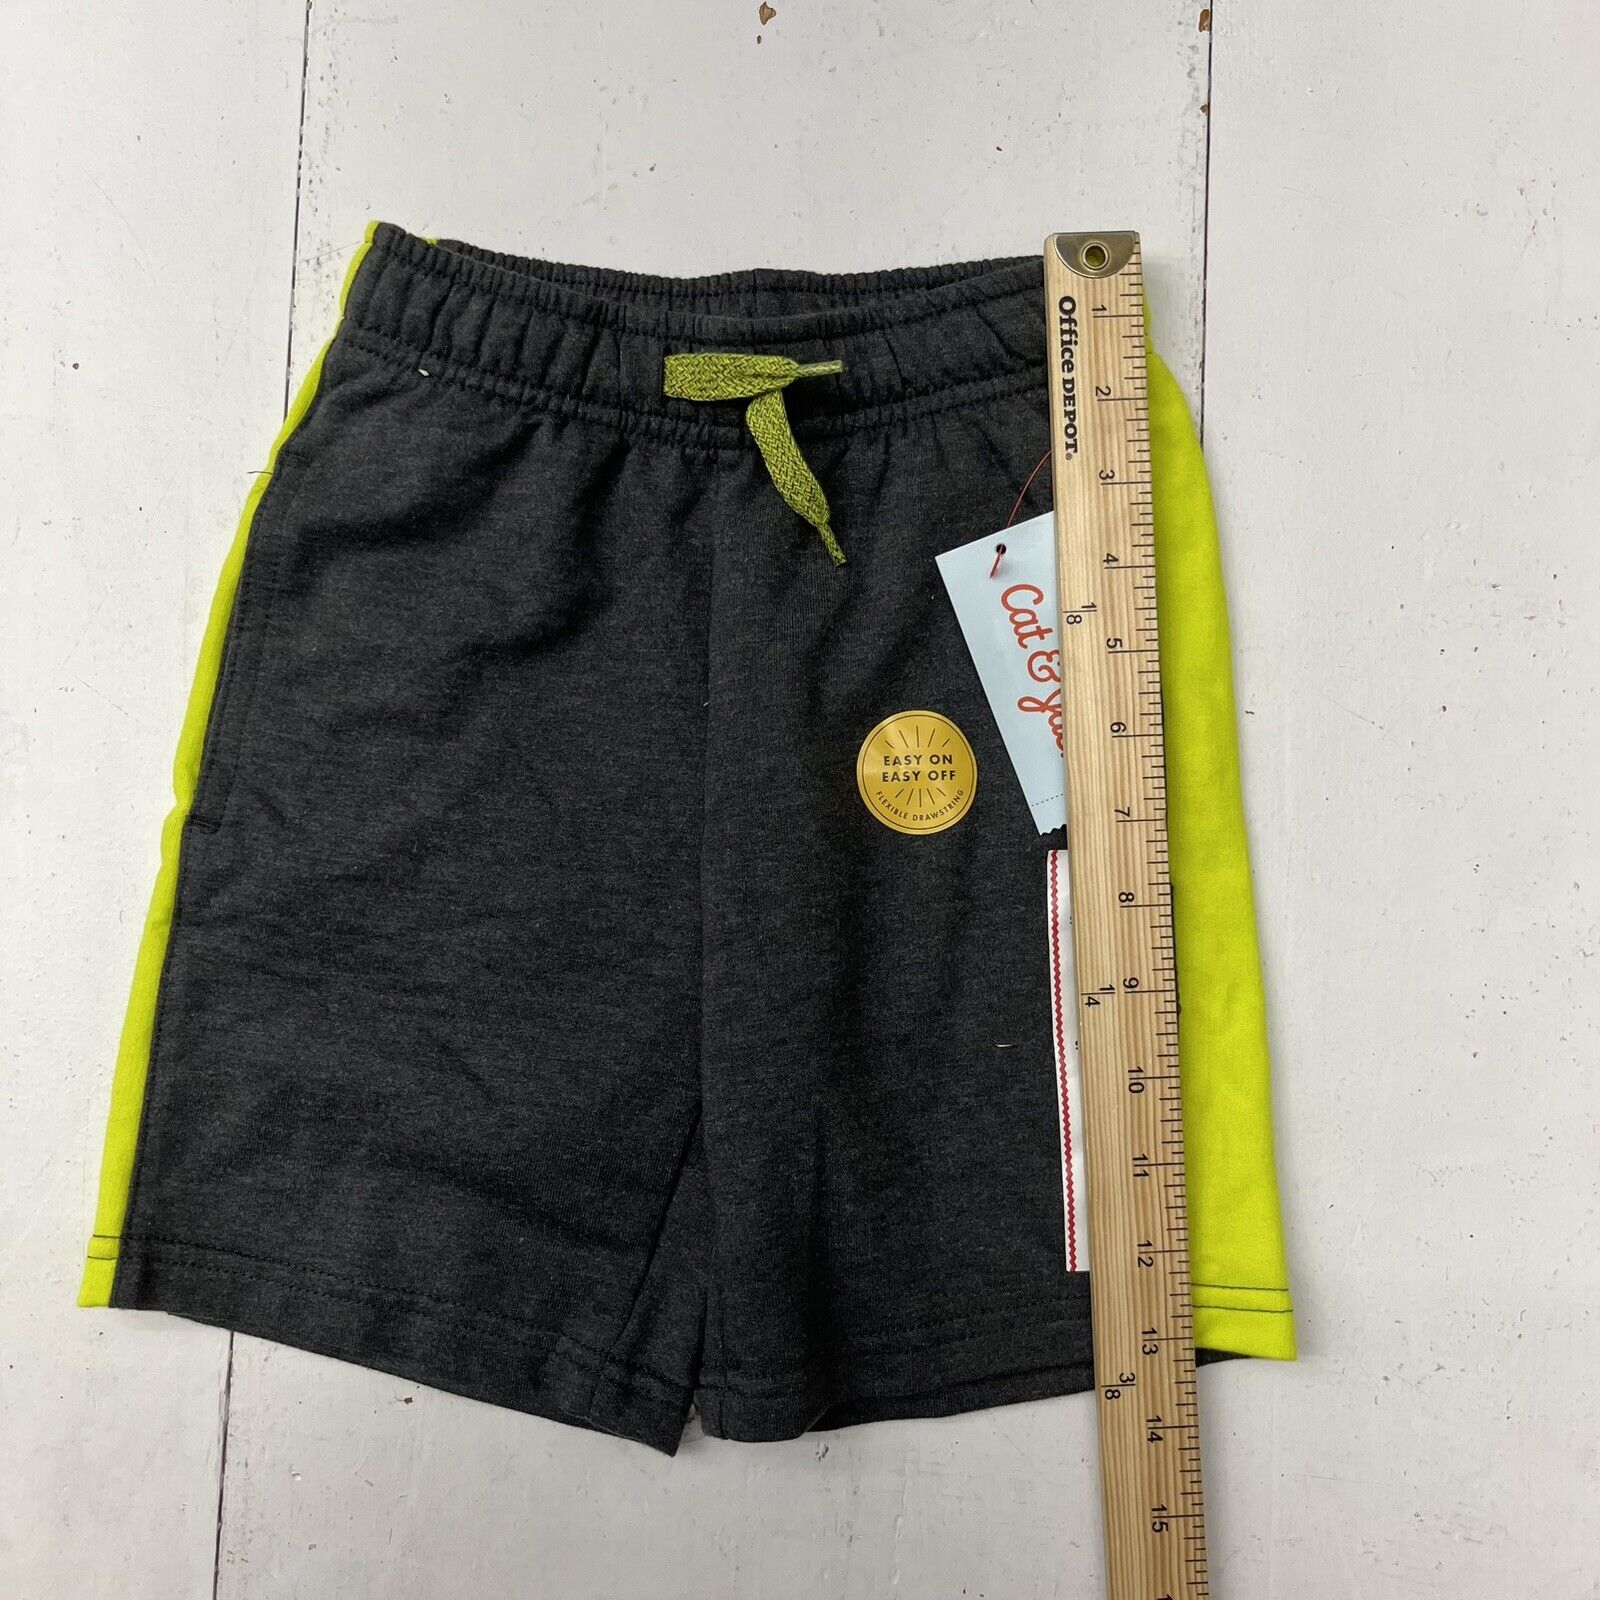 Cat & Jack Charcoal/Yellow Athletic Shorts Boys Size XS (4/5) NEW